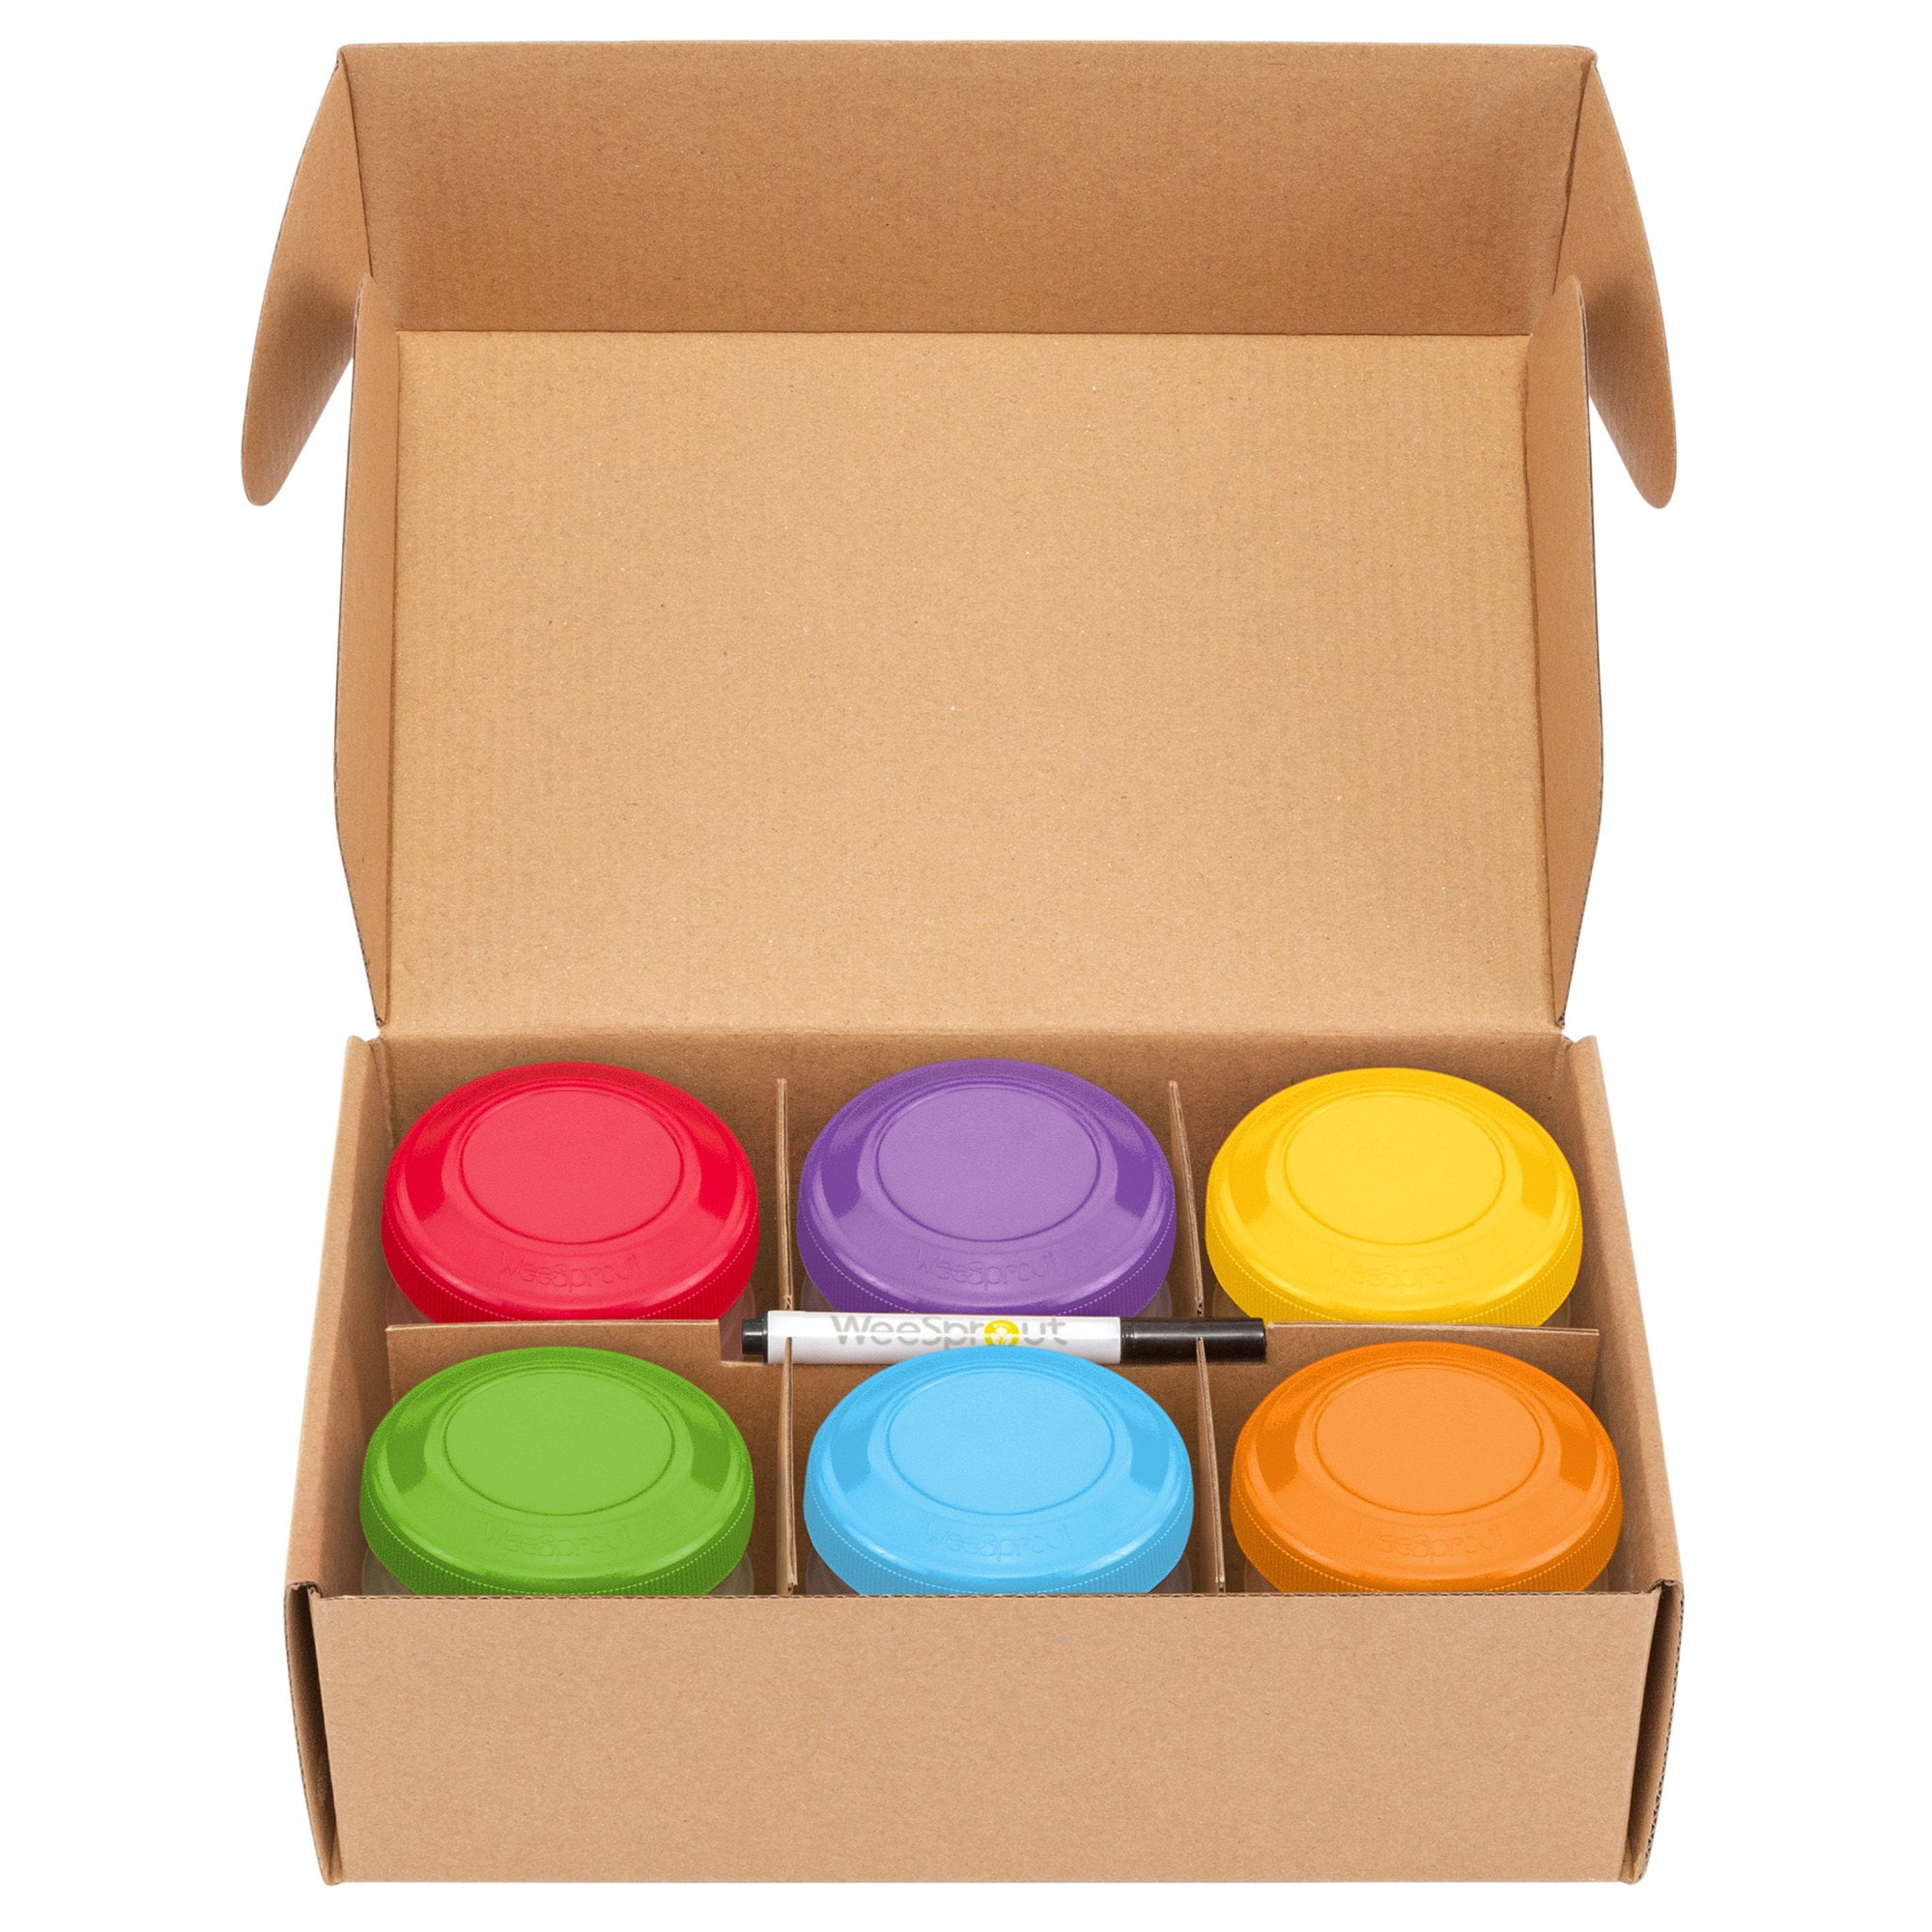 Plaskidy Baby Food Storage Containers Set of 12 - 4 oz Plastic